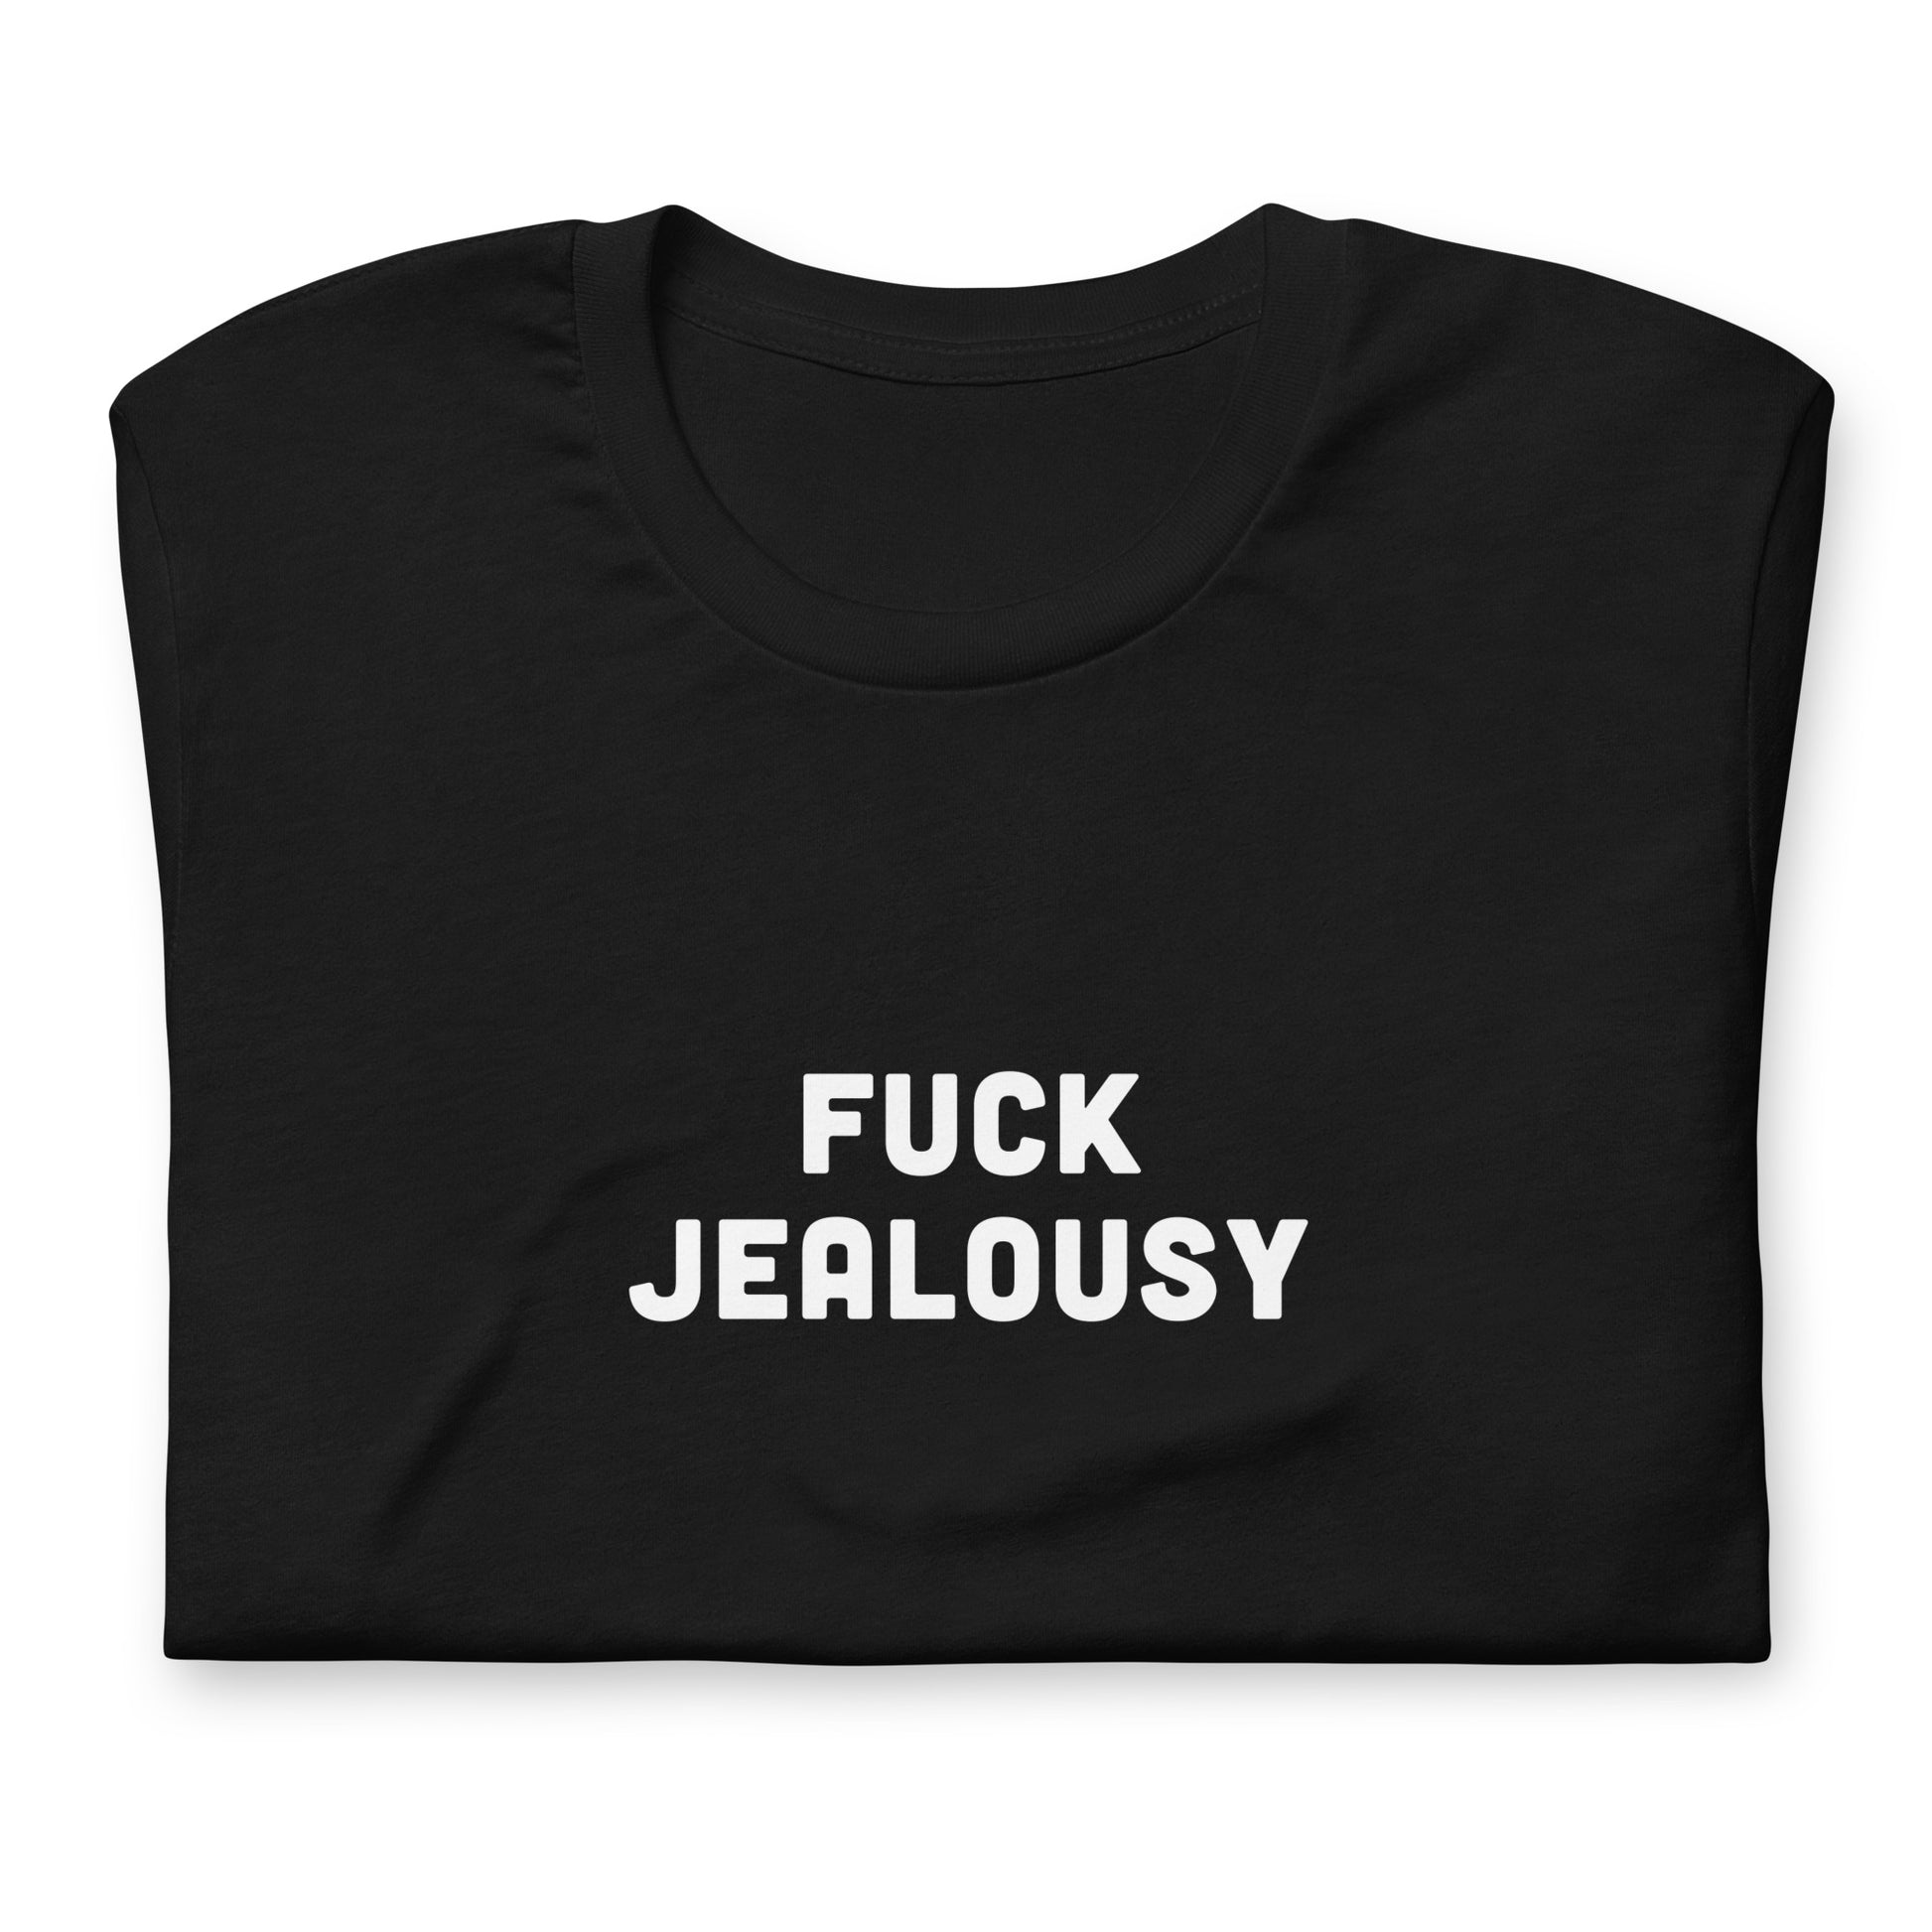 Fuck Jealousy T-Shirt Size M Color Black